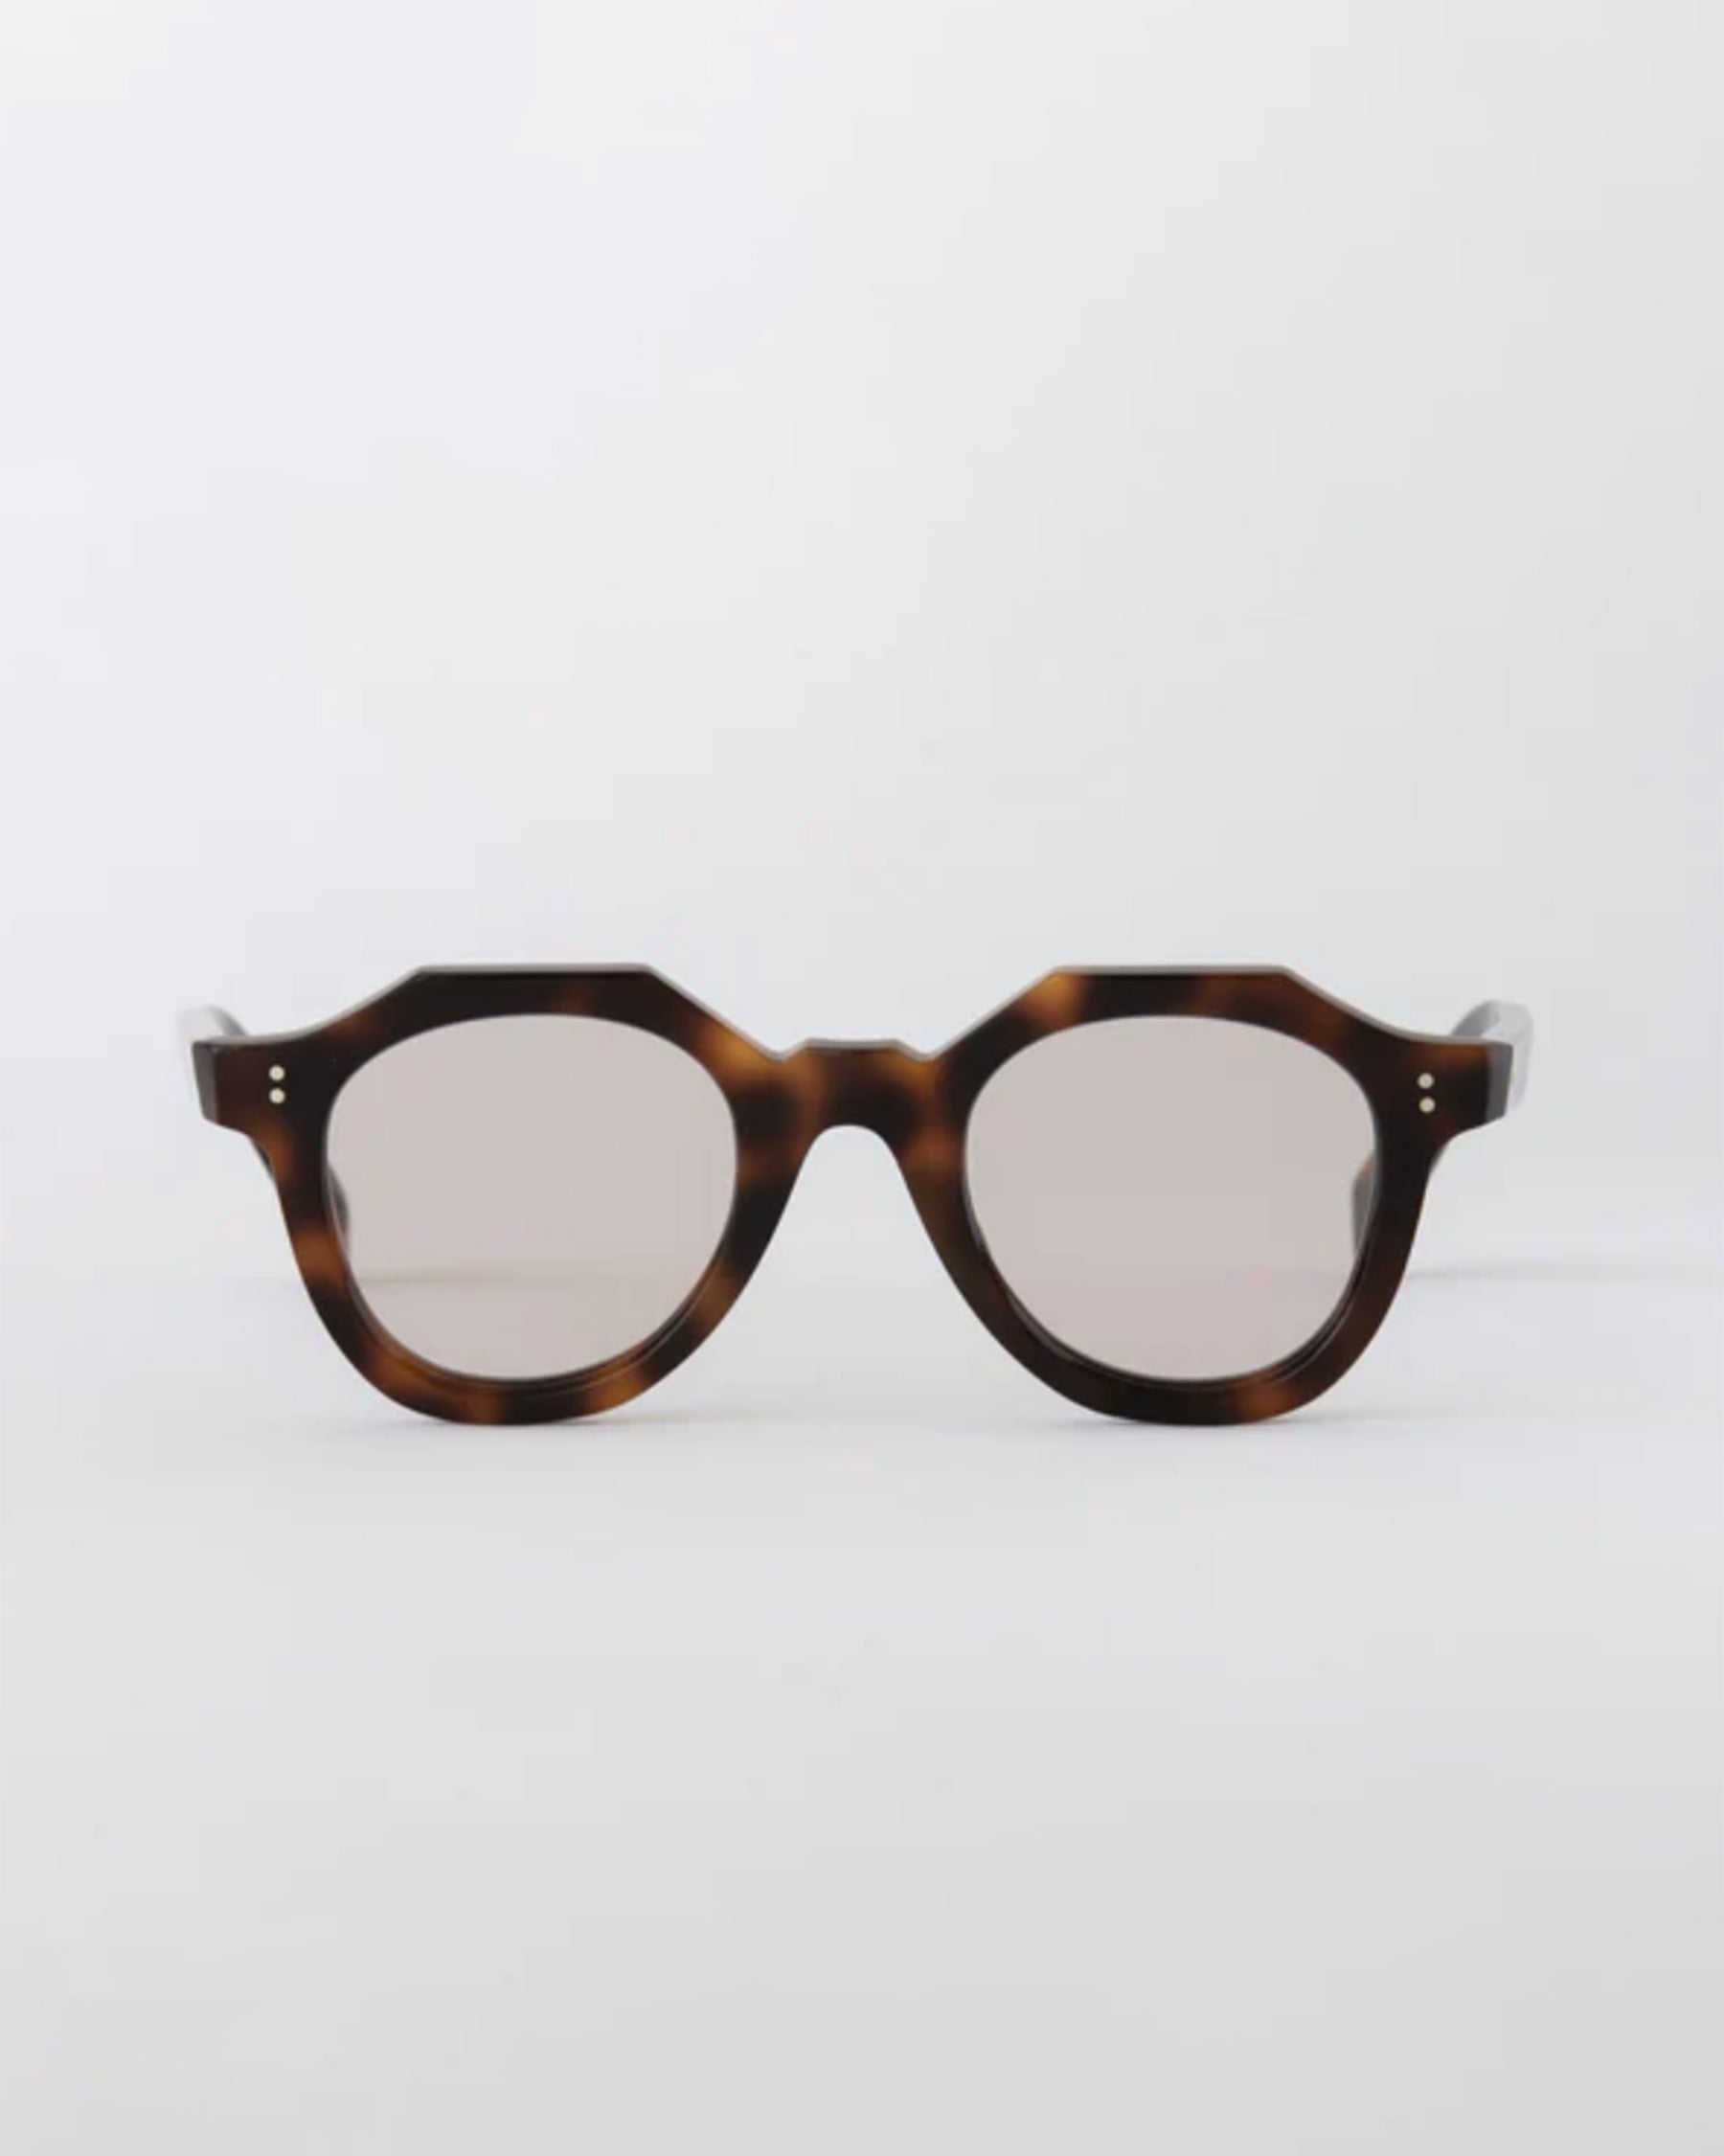 gp-02 Sunglasses ecalle / Lens: Brown